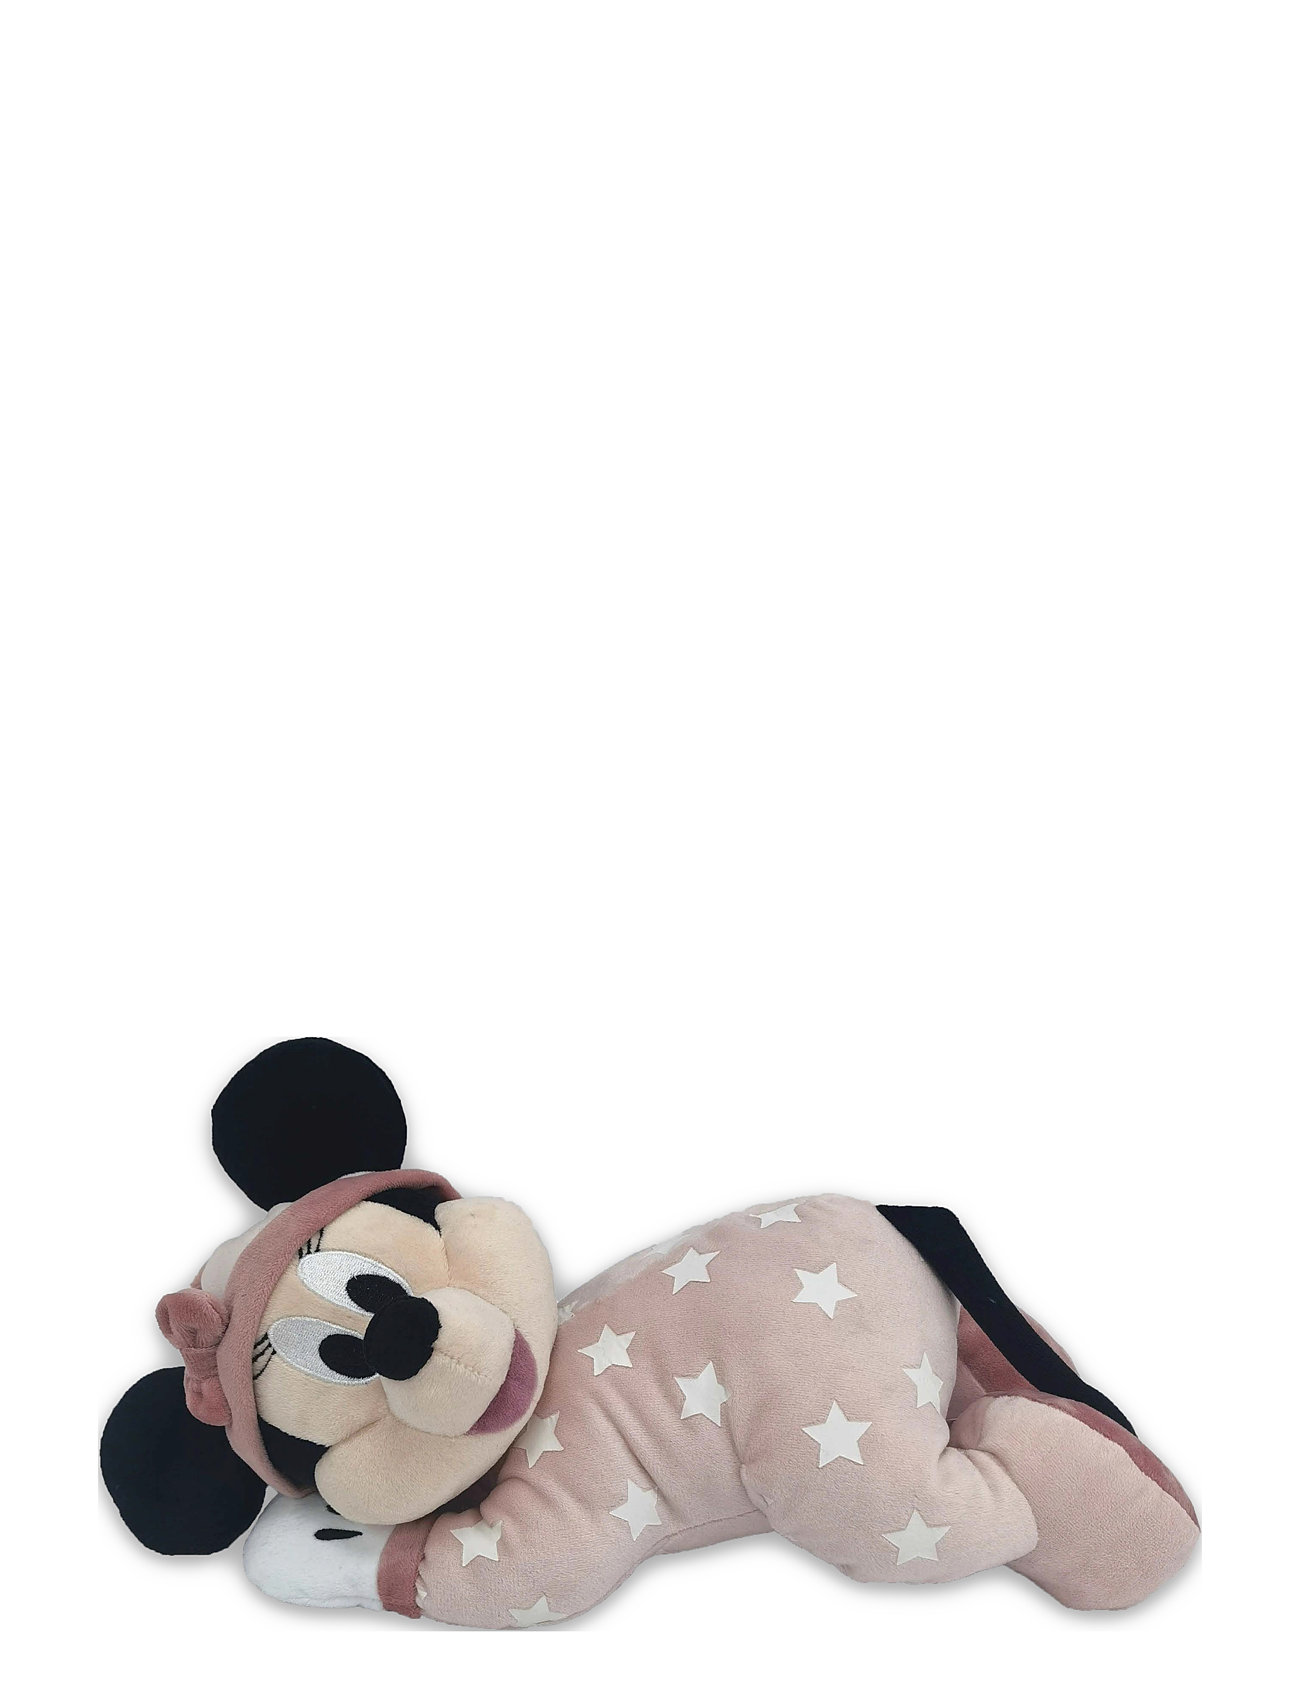 Disney Sleep Well Minnie Gid, 30Cm Toys Soft Toys Stuffed Animals Pink Minnie Mouse